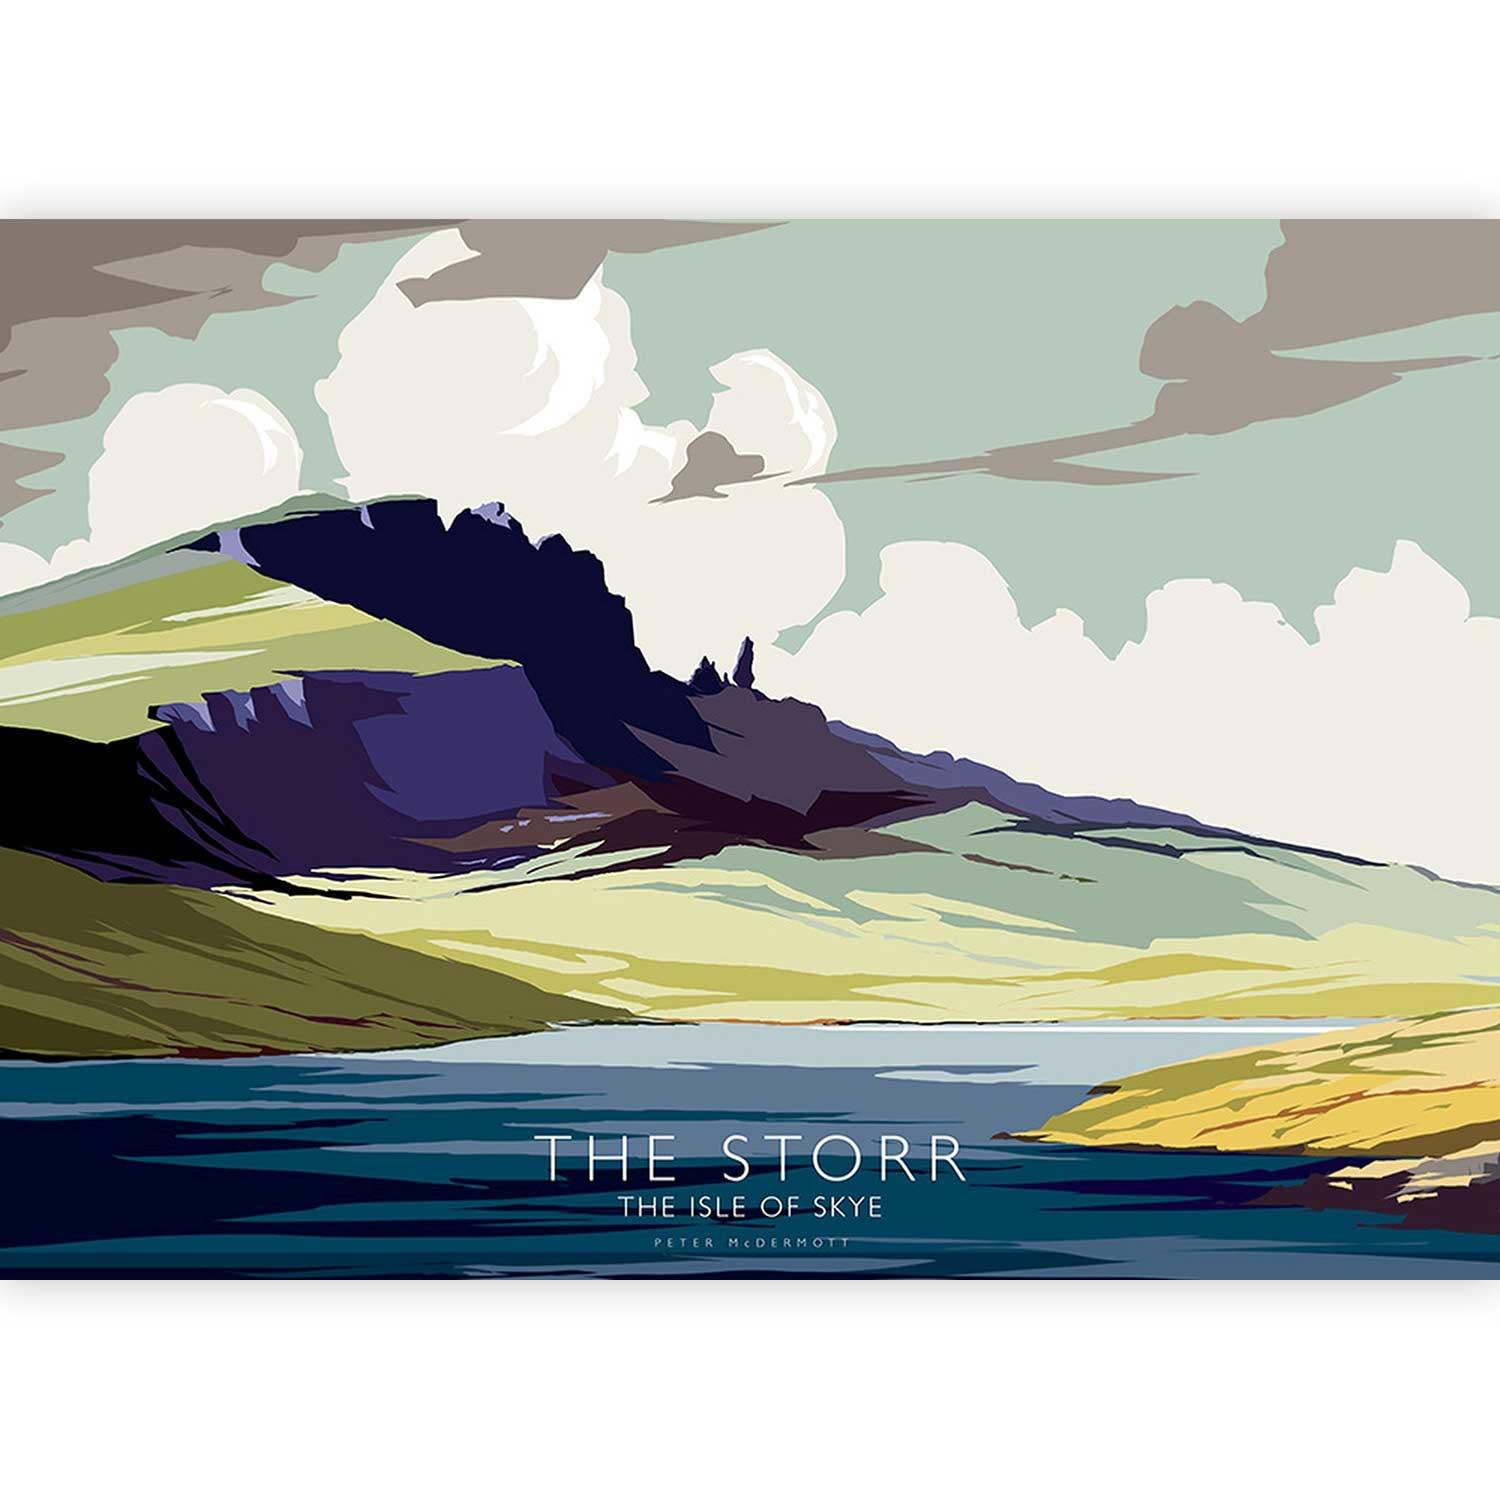 The Storr The Isle of Skye by Peter McDermott